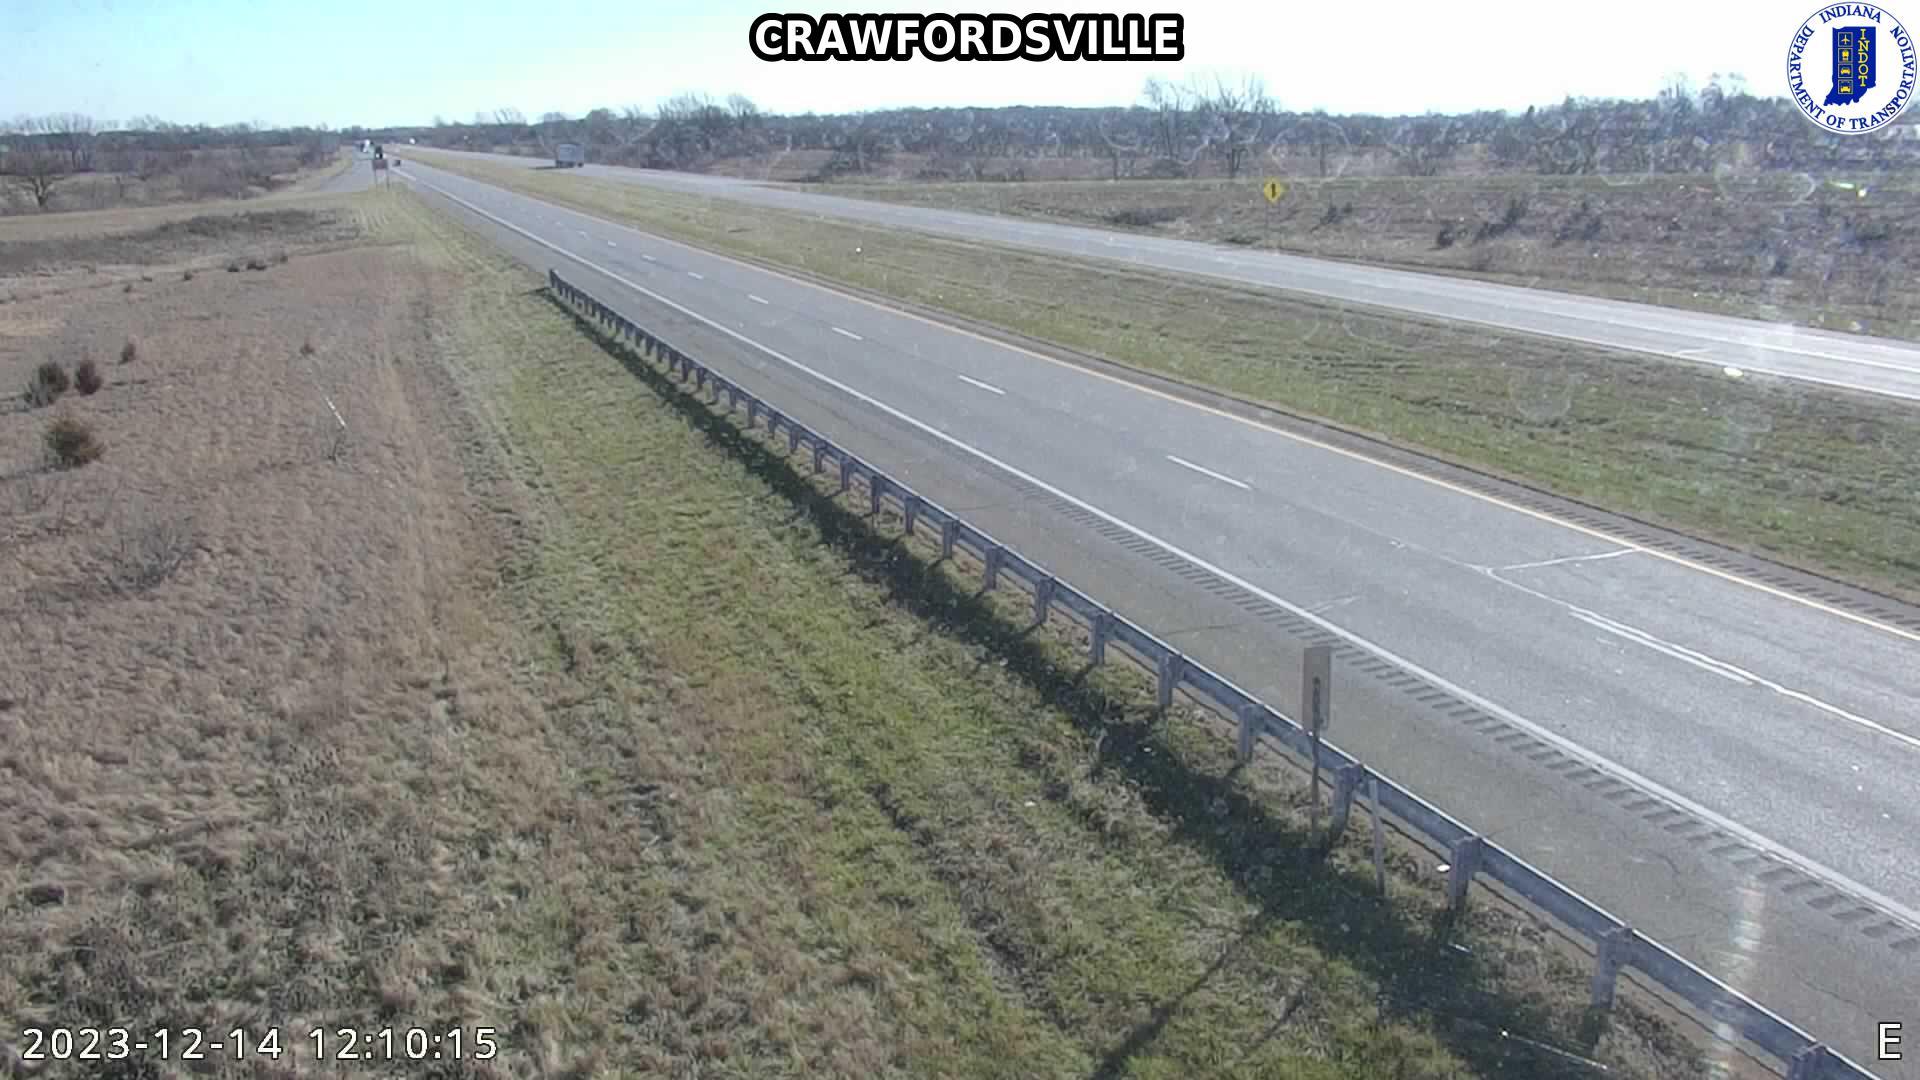 Jamestown: I-74: CRAWFORDSVILLE Traffic Camera